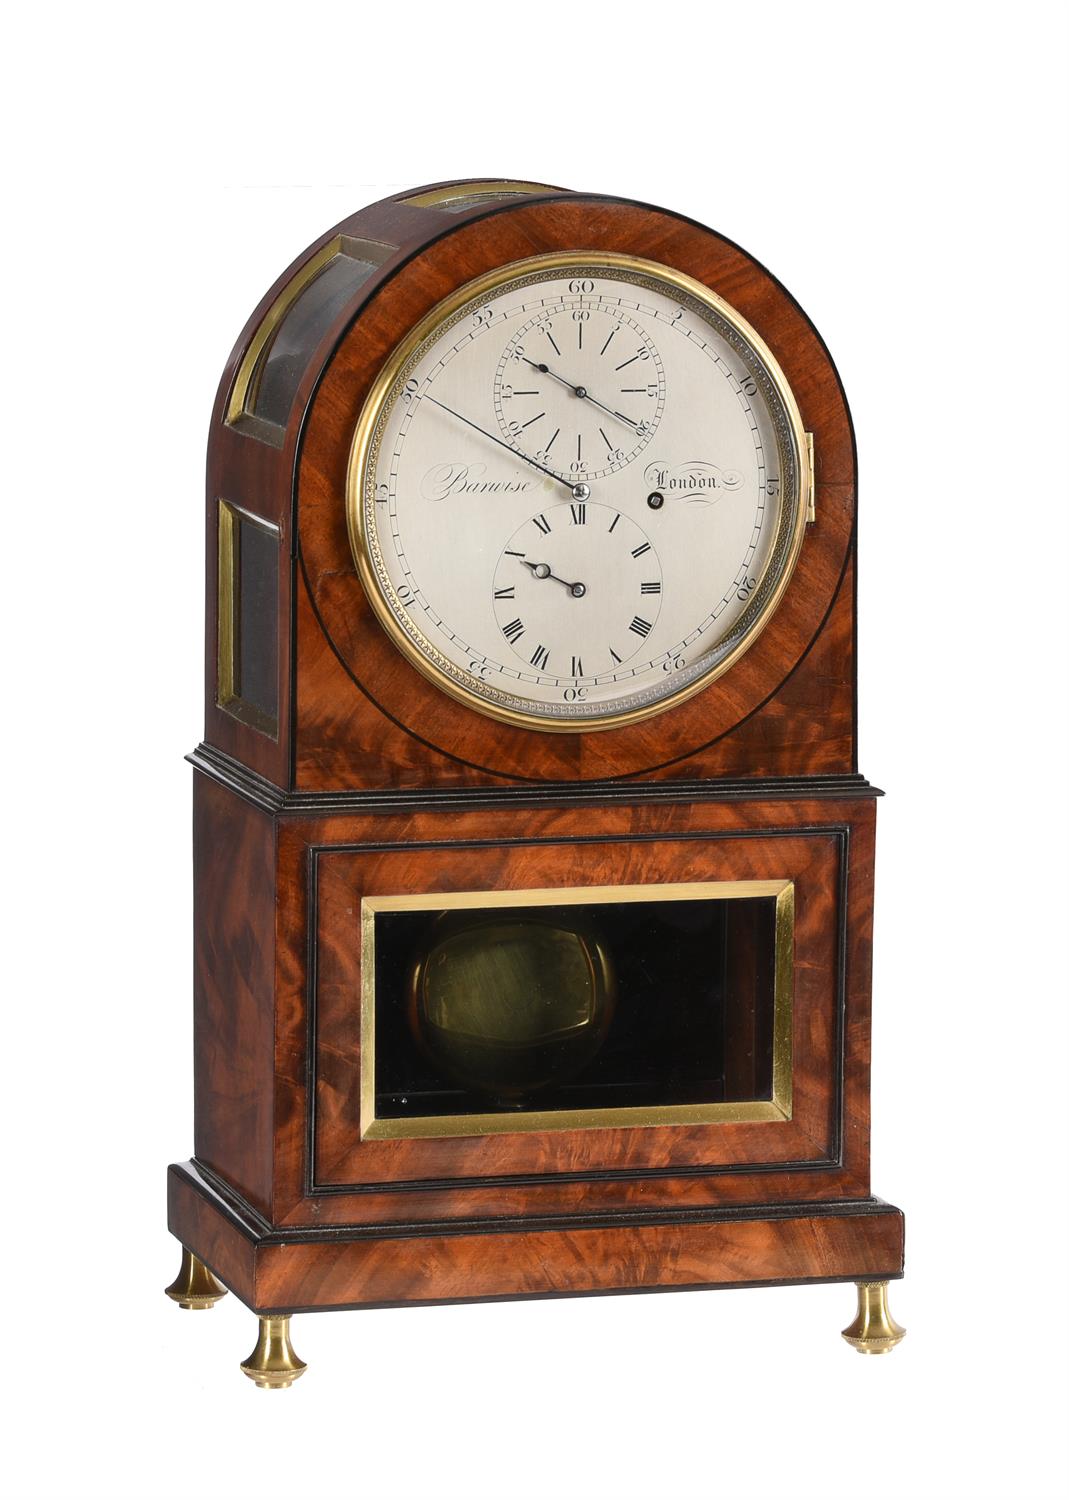 Y A fine rare George IV brass mounted mahogany table regulator